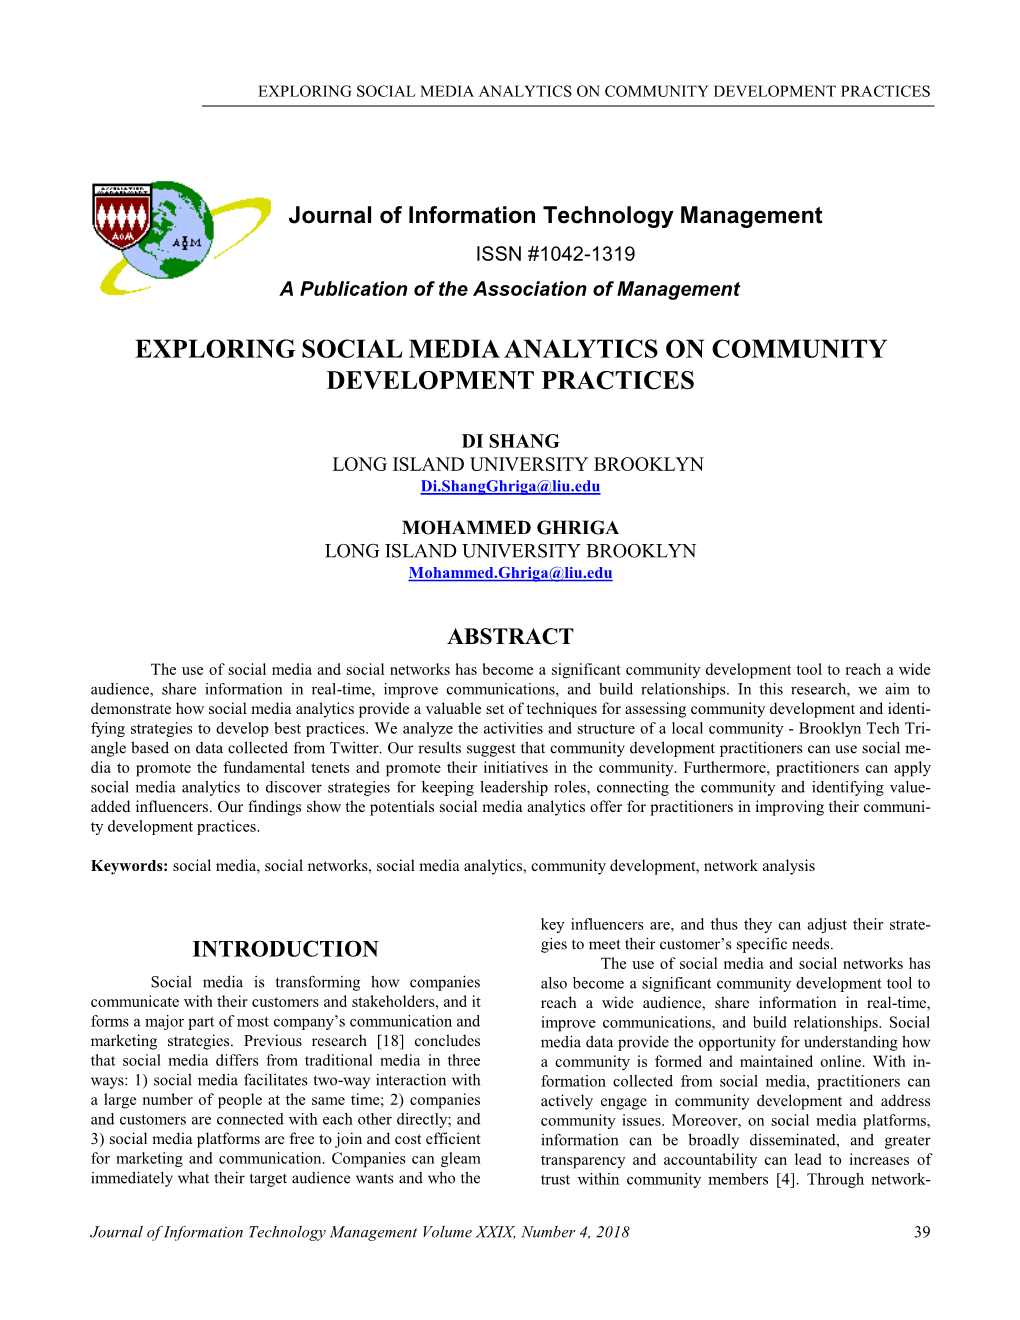 Exploring Social Media Analytics on Community Development Practices